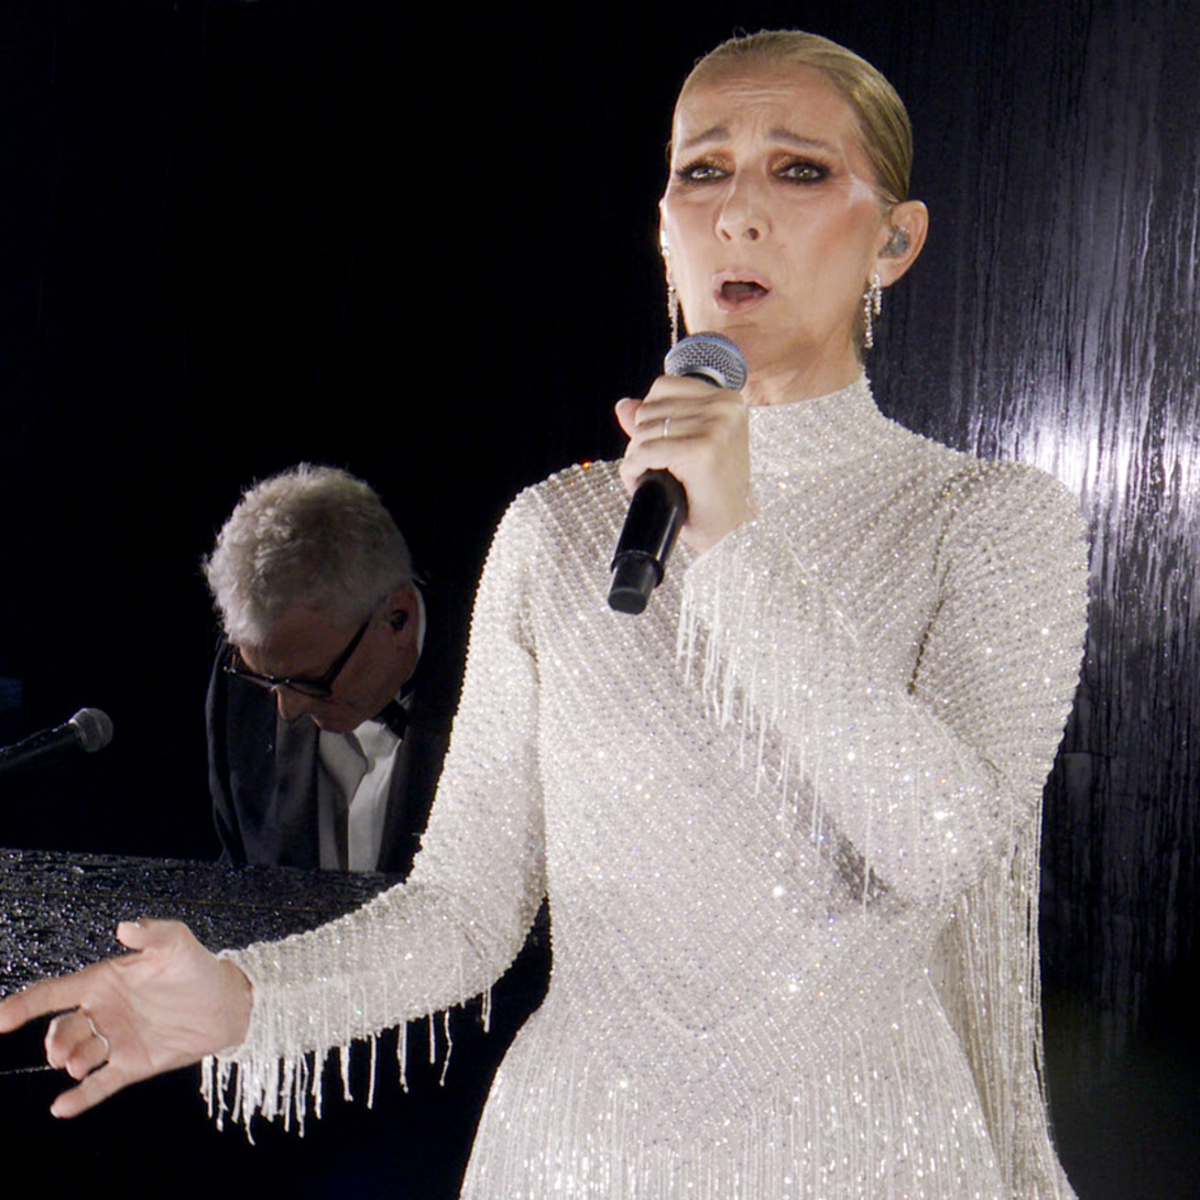 Céline Dion Shares How She Felt Making Comeback at 2024 Paris Olympics